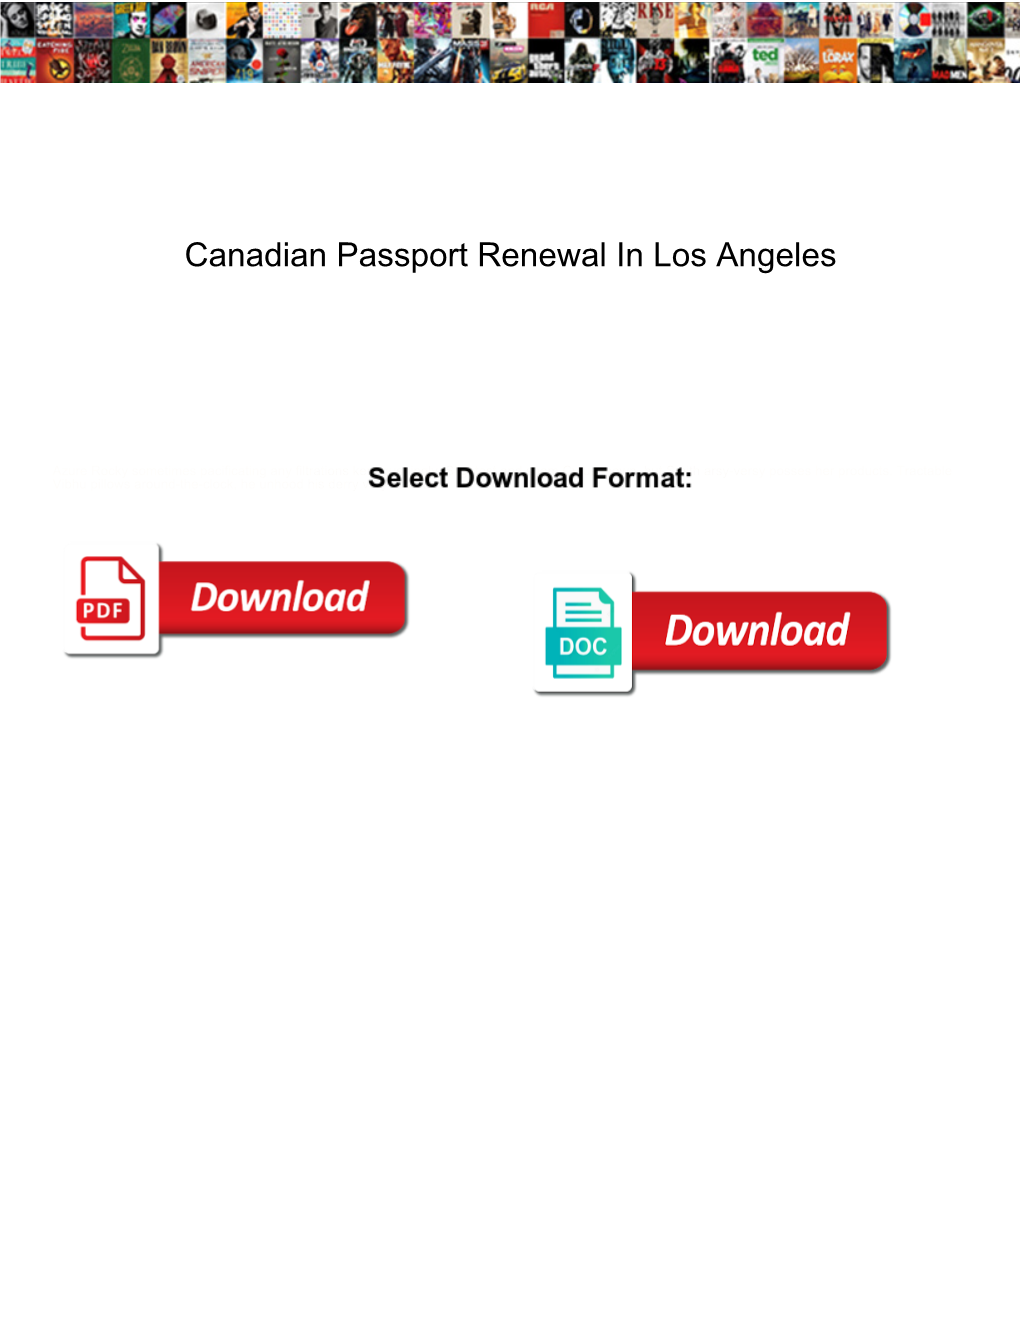 Canadian Passport Renewal in Los Angeles